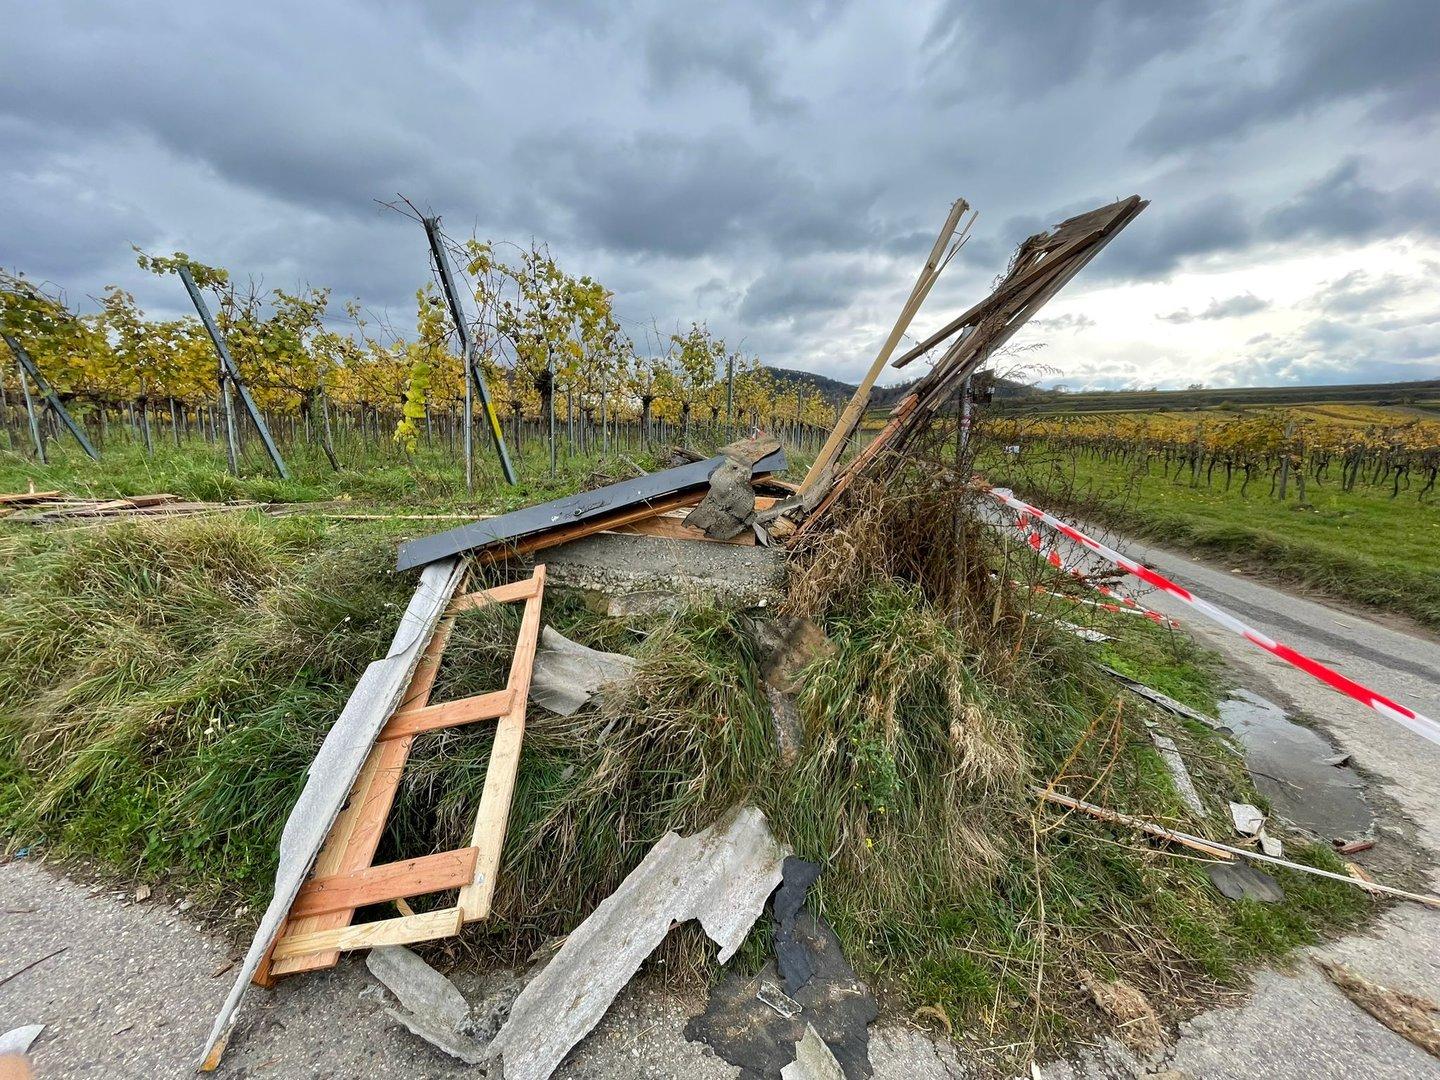 Unbekannte sprengten Holzhütte im Bezirk Krems